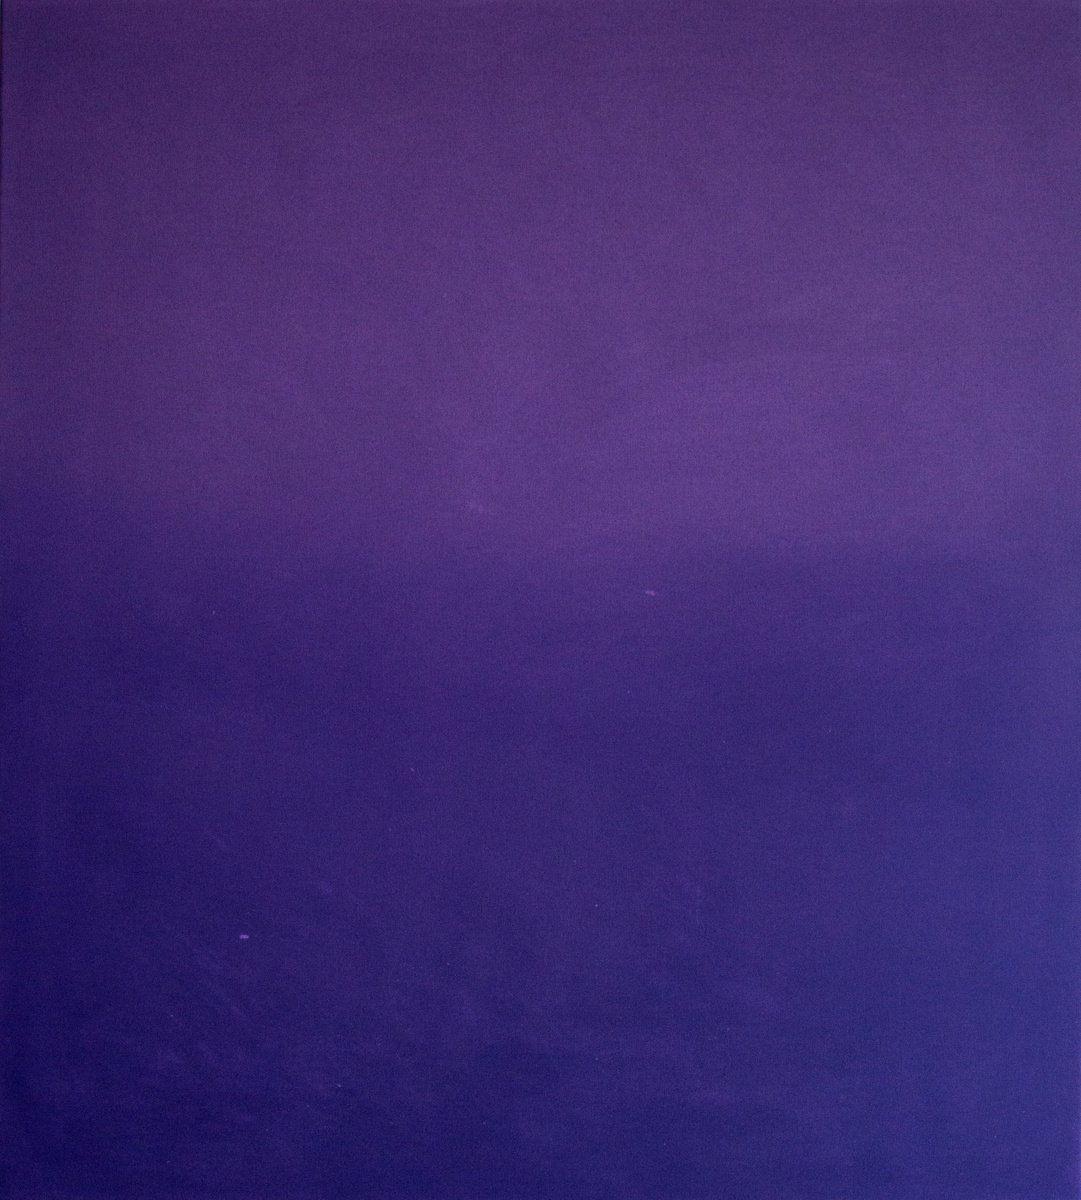 Purple Gradient by Petr Johan Marek